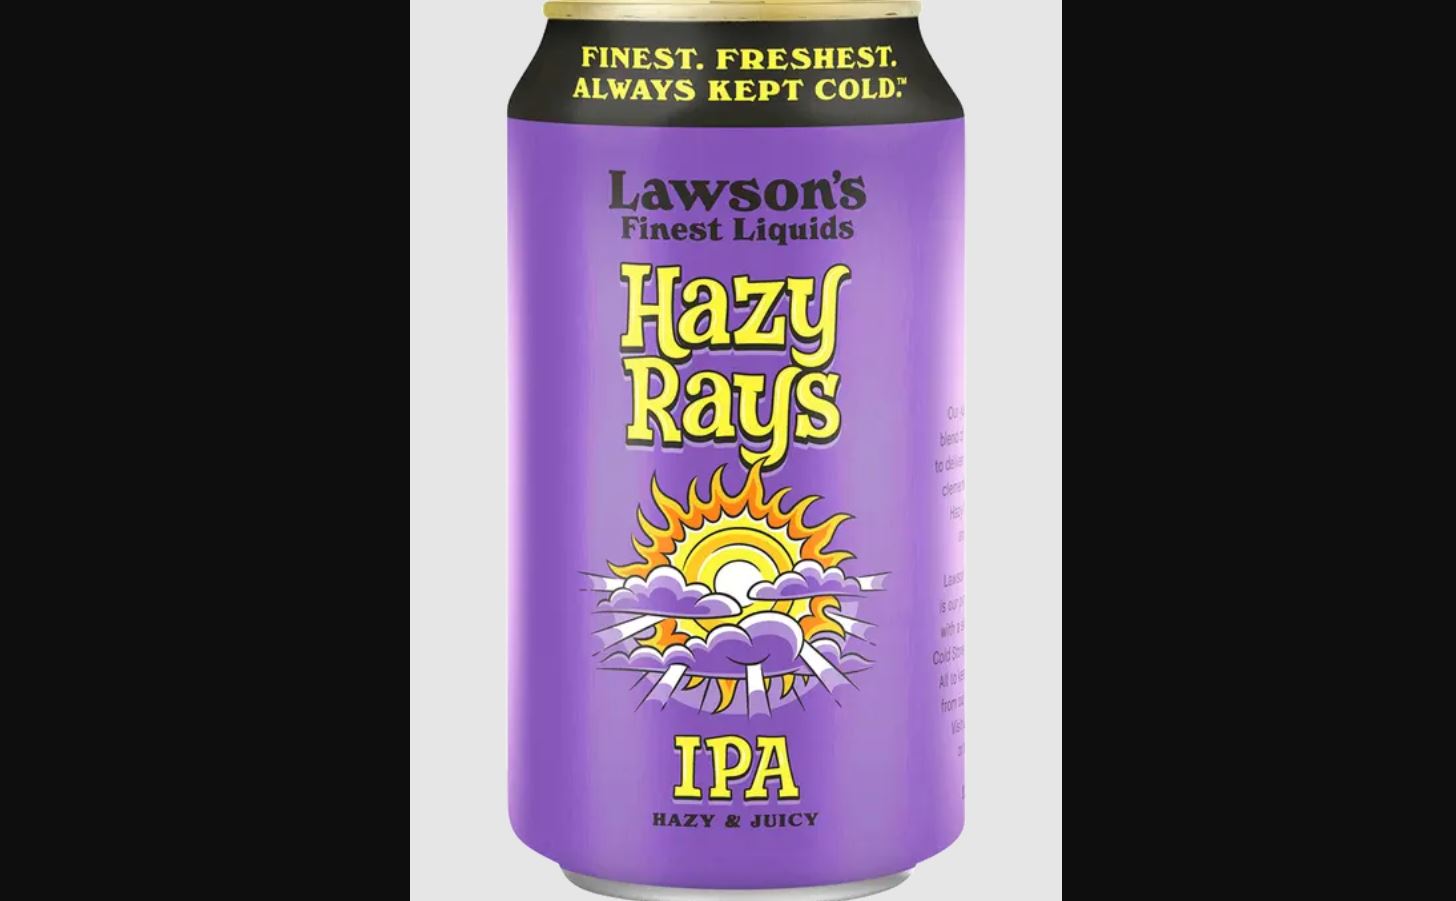 Lawson’s Finest Hazy Rays